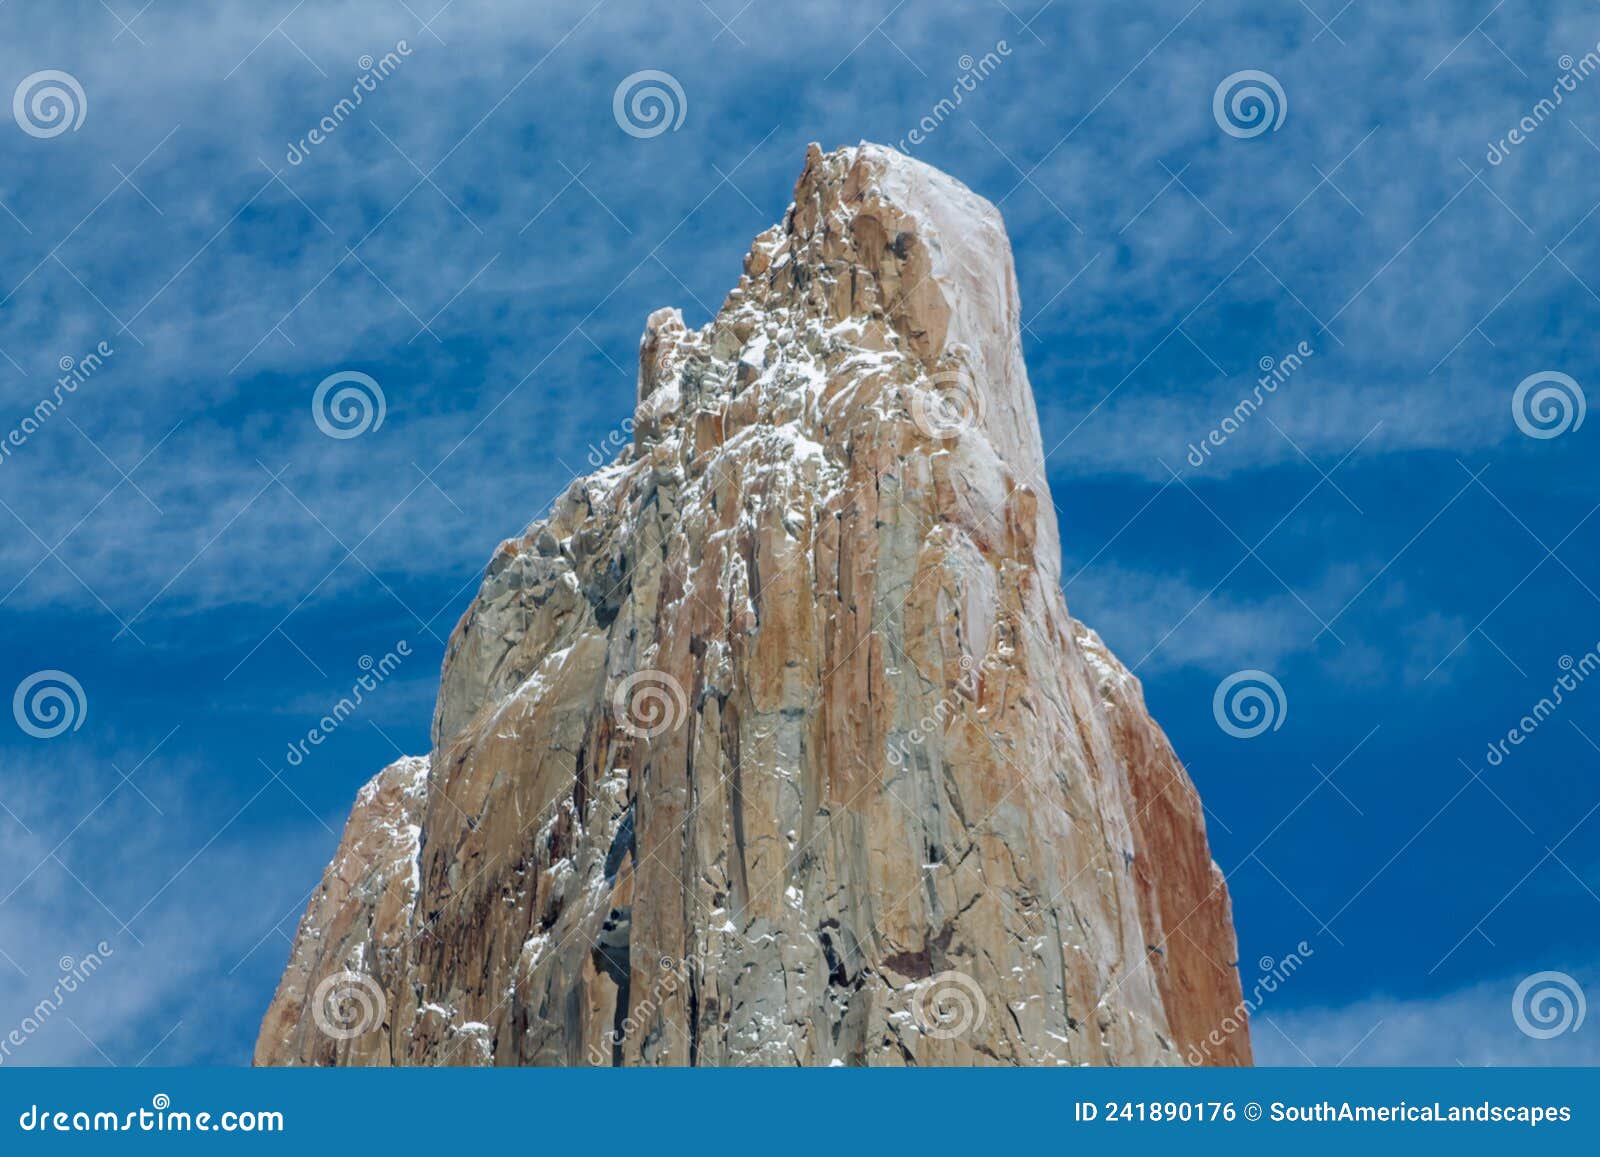 mountain peak torres del paine in patagonia, chile